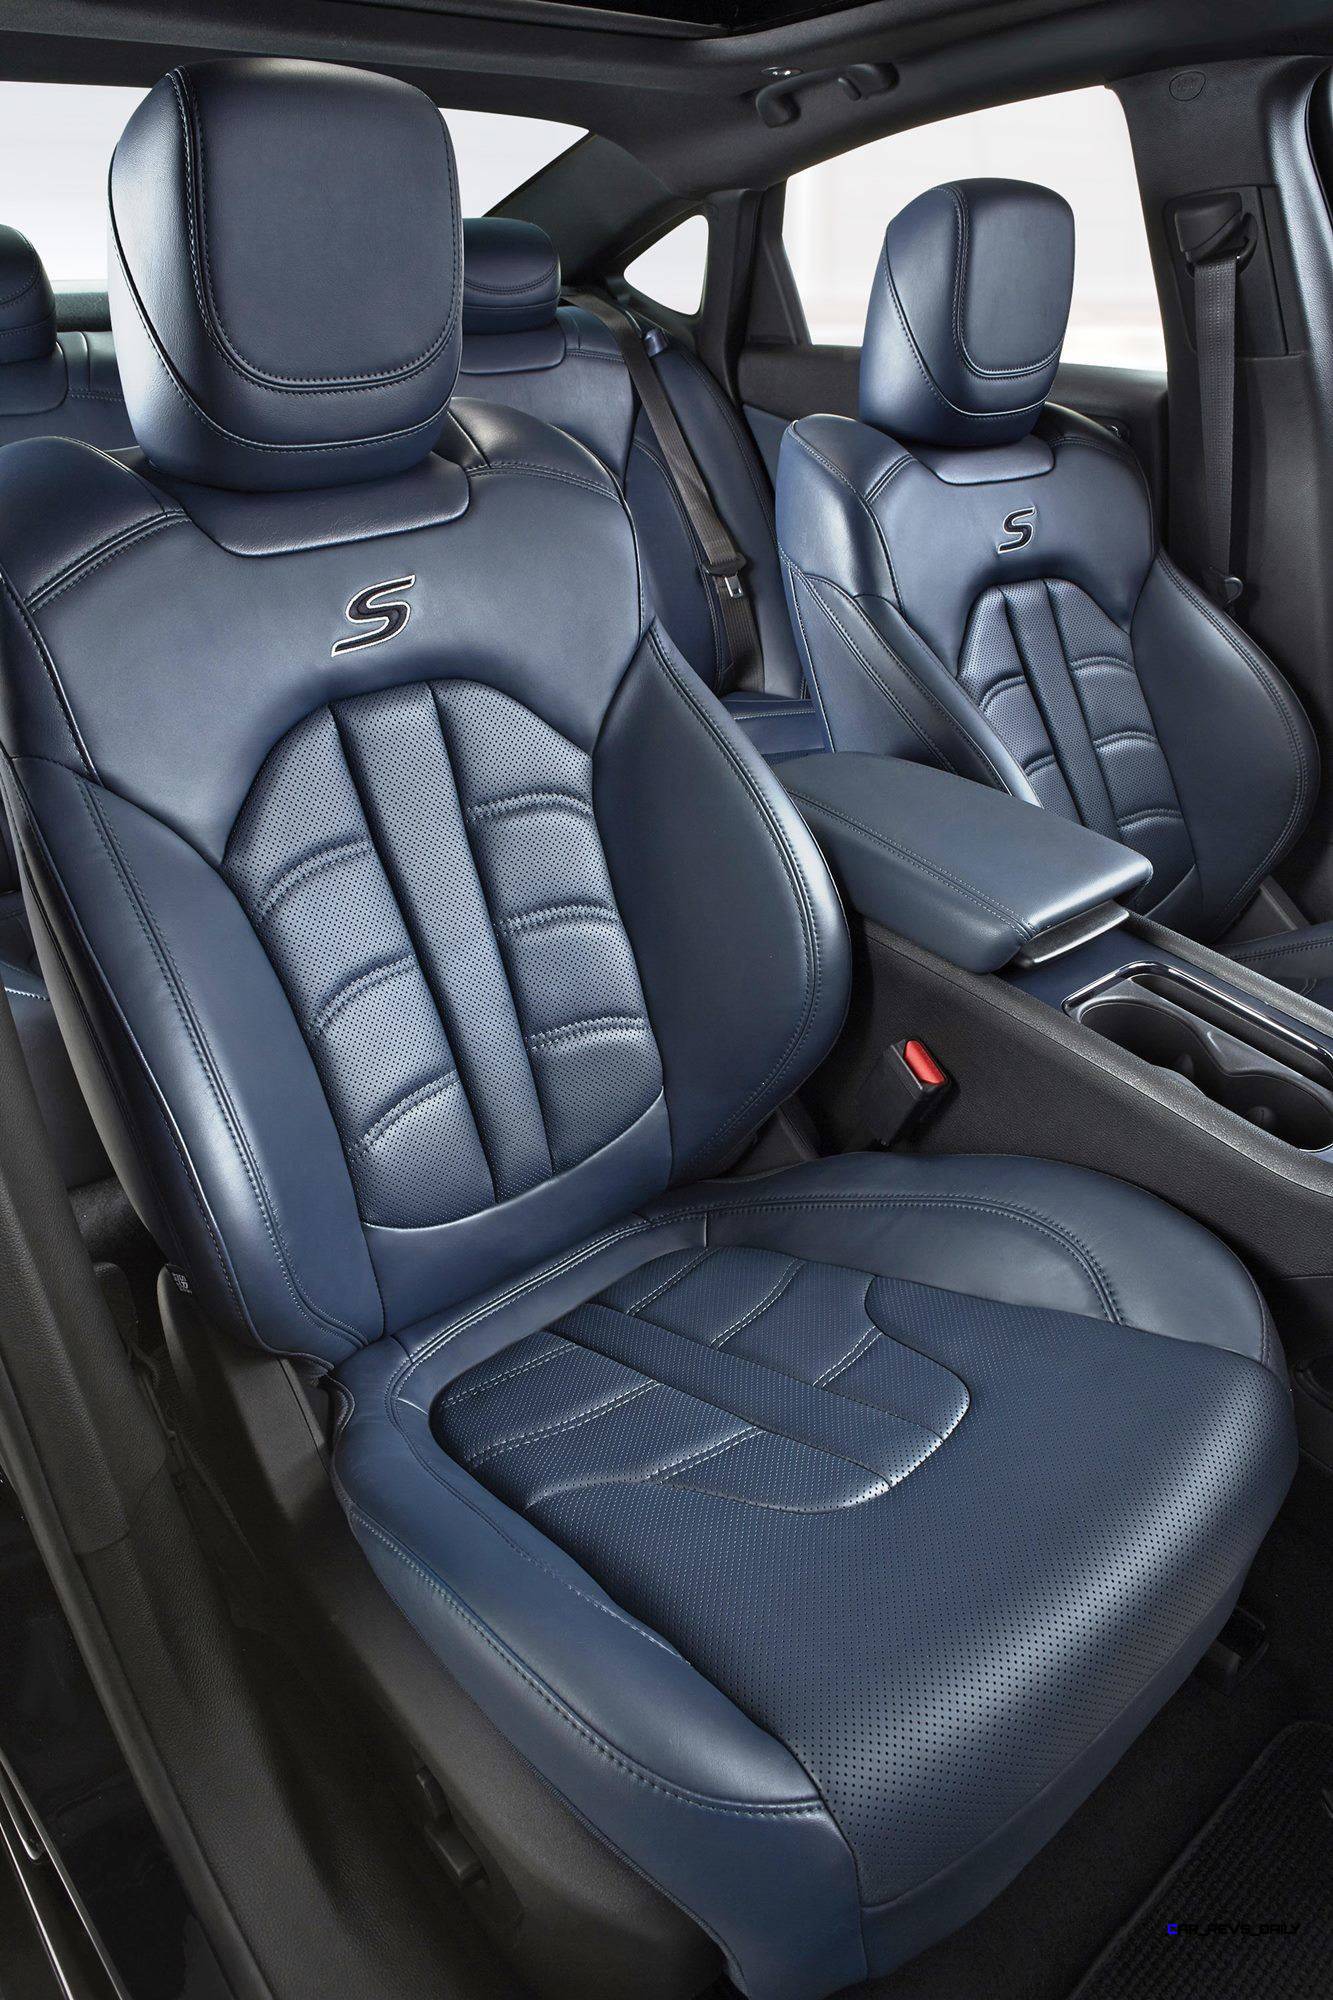 2015 Chrysler 200 Ambassador Blue Leather Interior